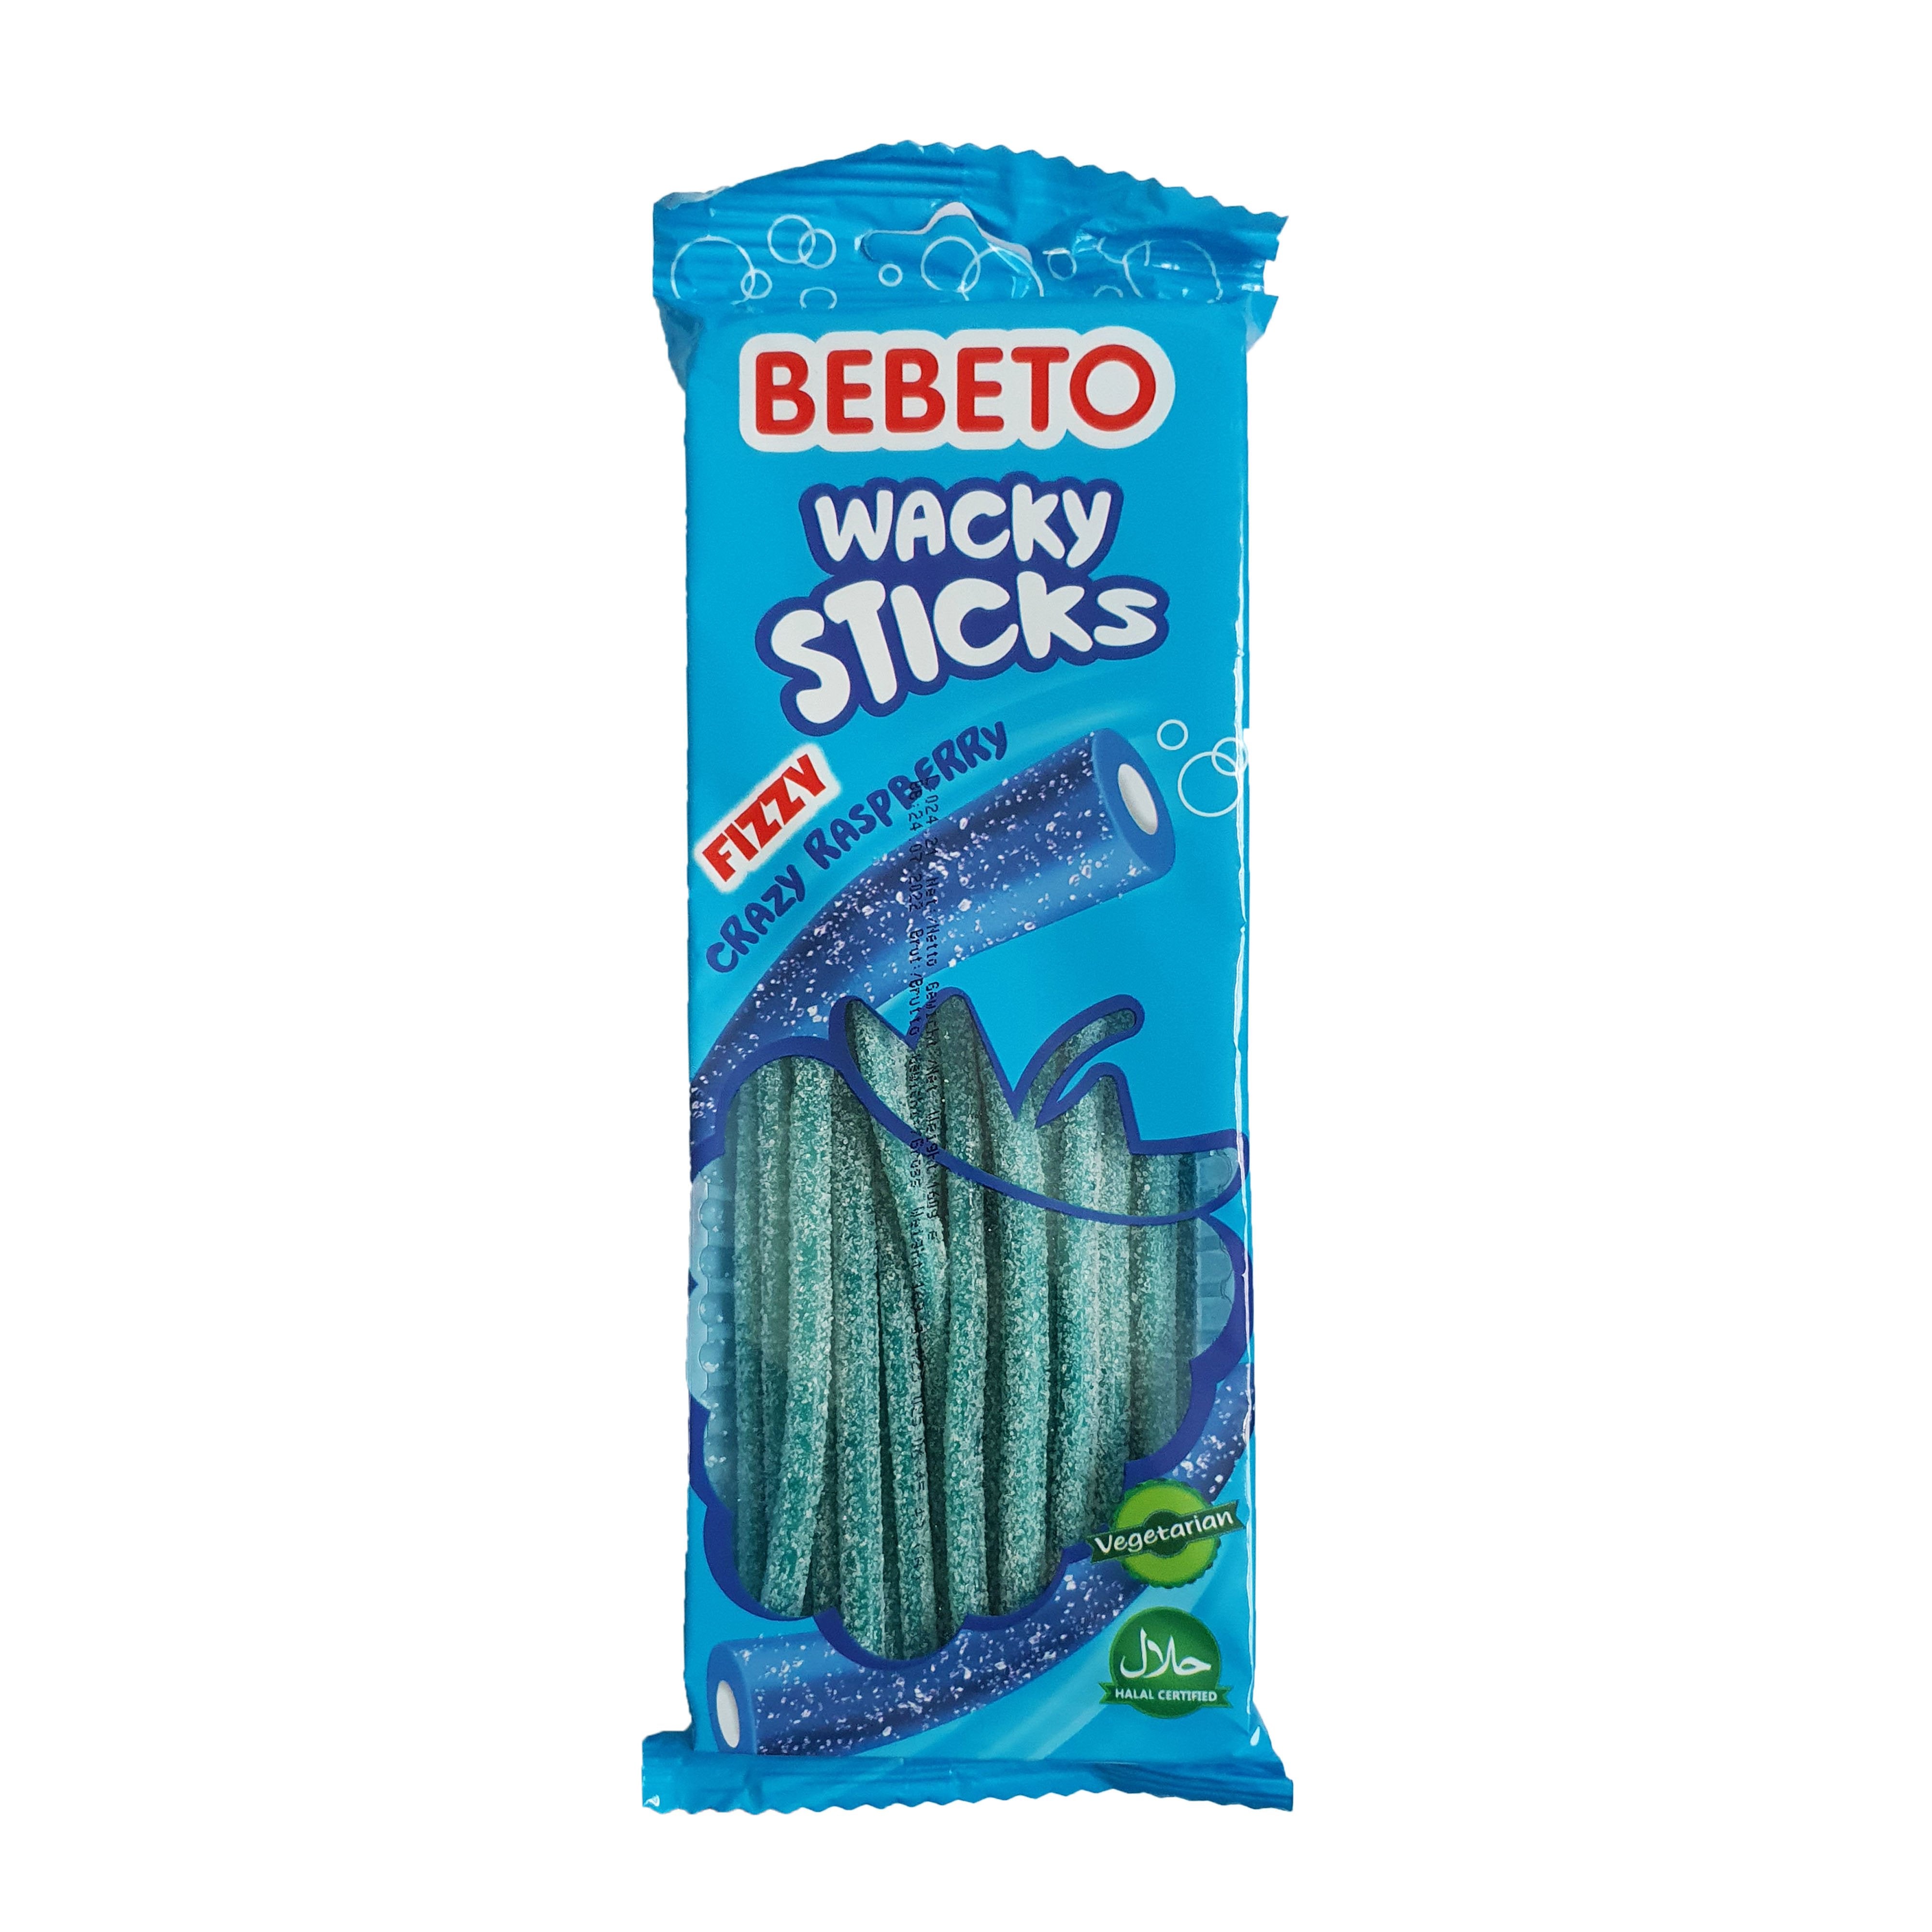 Bebeto Wacky Sticks Raspberry halal sweets hmc sweets